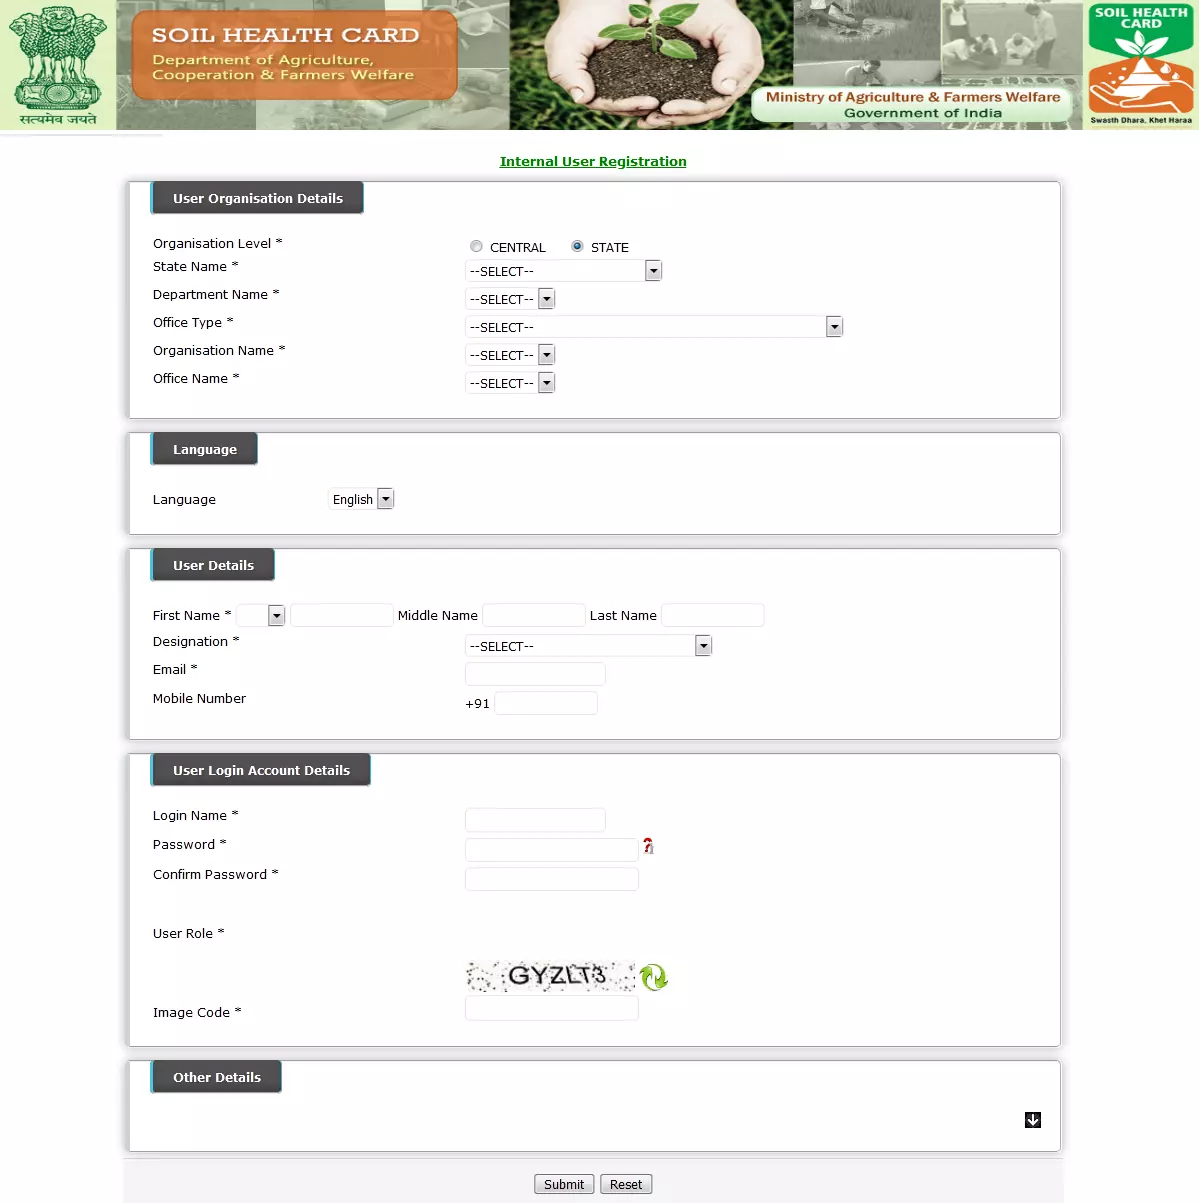 मृदा स्वास्थ्य कार्ड योजना ऑनलाइन रजिस्टेशन / Soil Health Card Scheme Online Apply